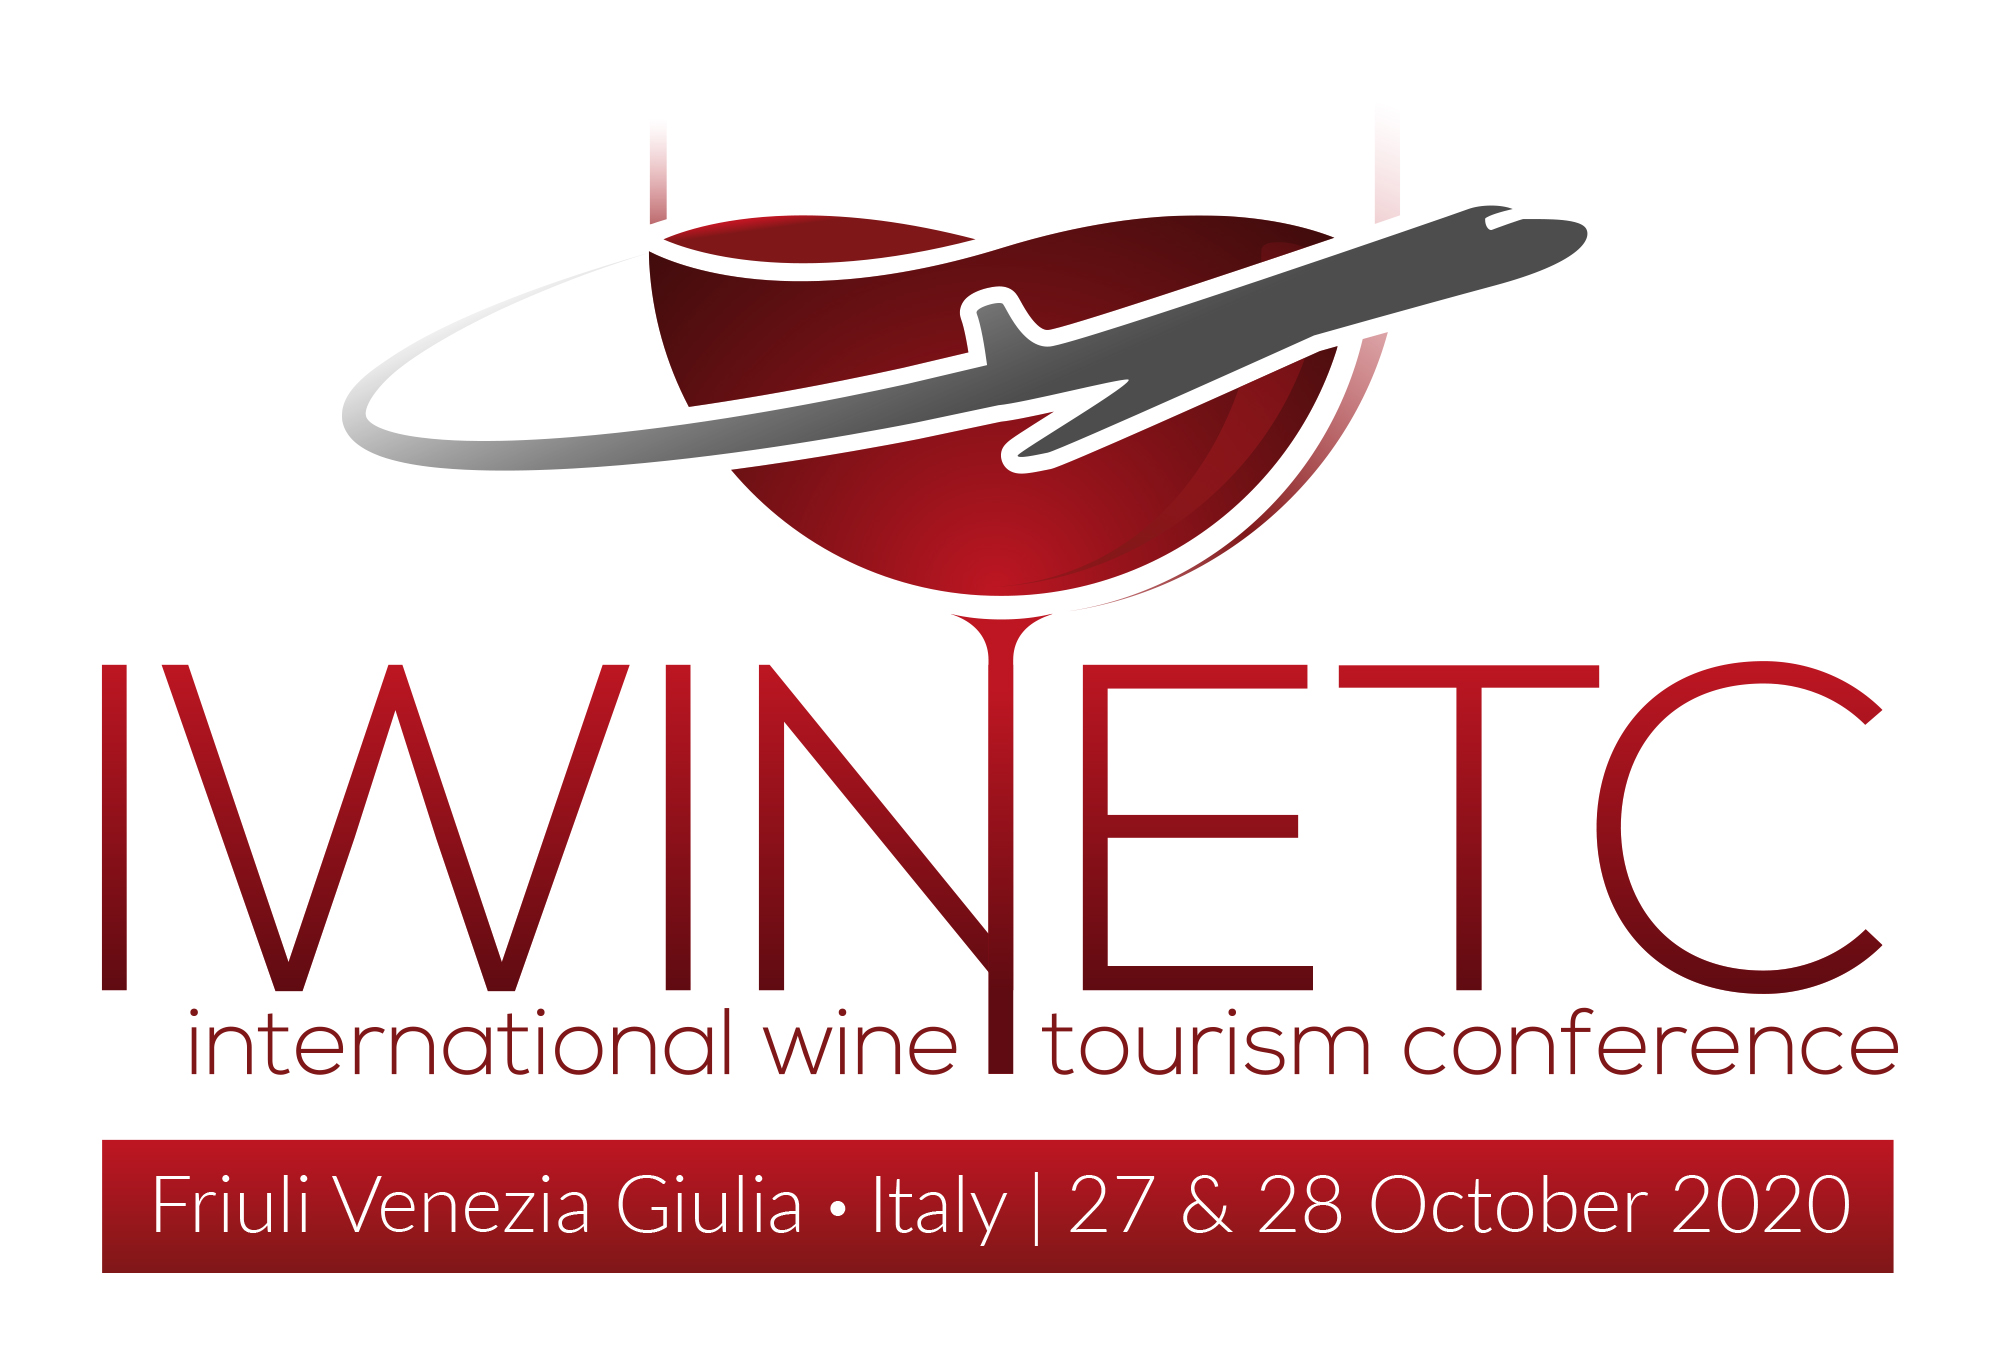 International Wine Tourism Conference (IWINETC), Trieste, Friuli-Venezia Giulia, Italy